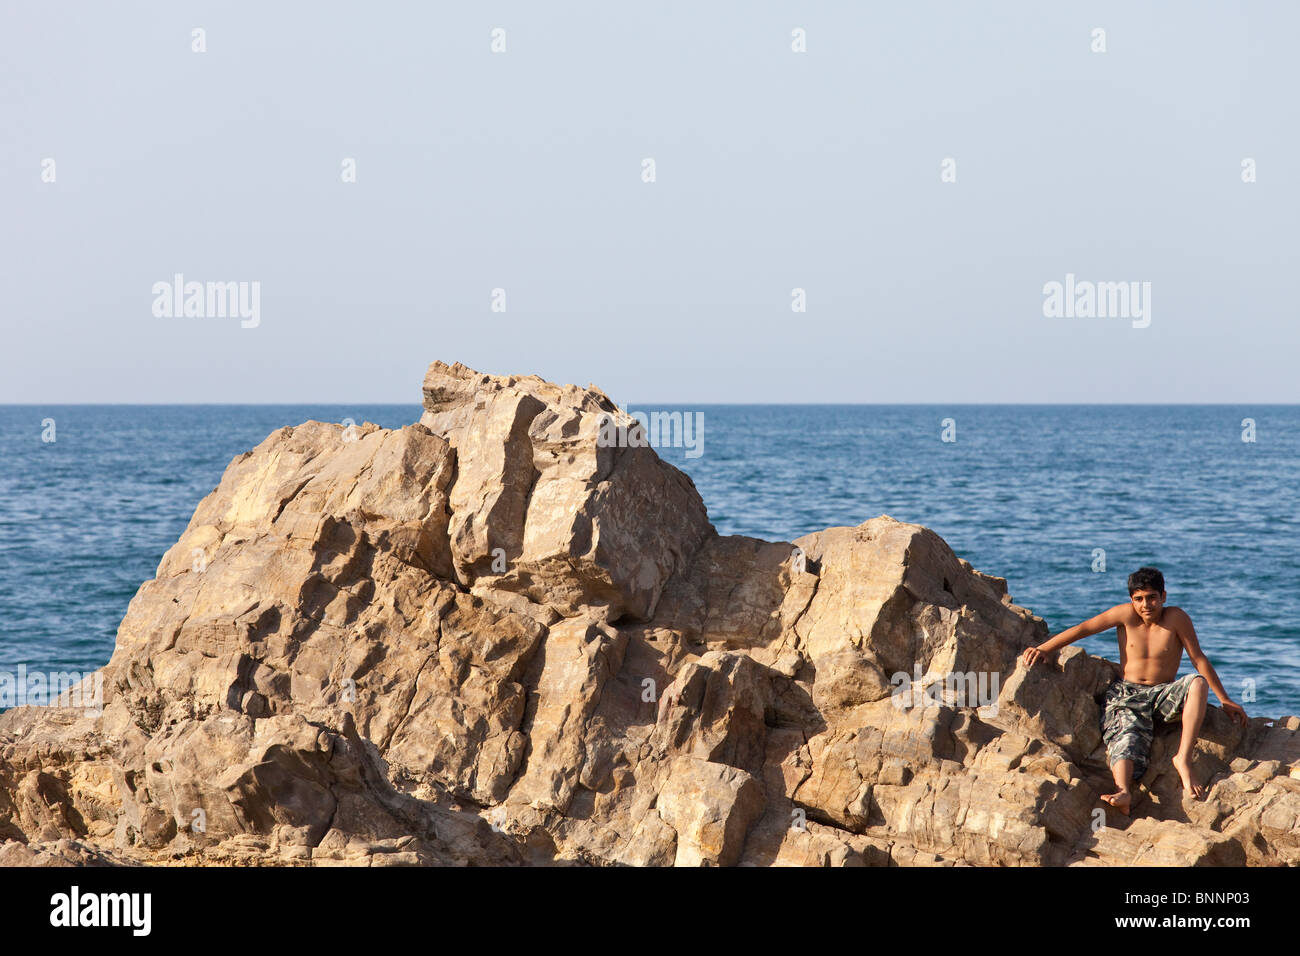 Artyom Island on the Caspian Sea near Baku, Azerbaijan Stock Photo